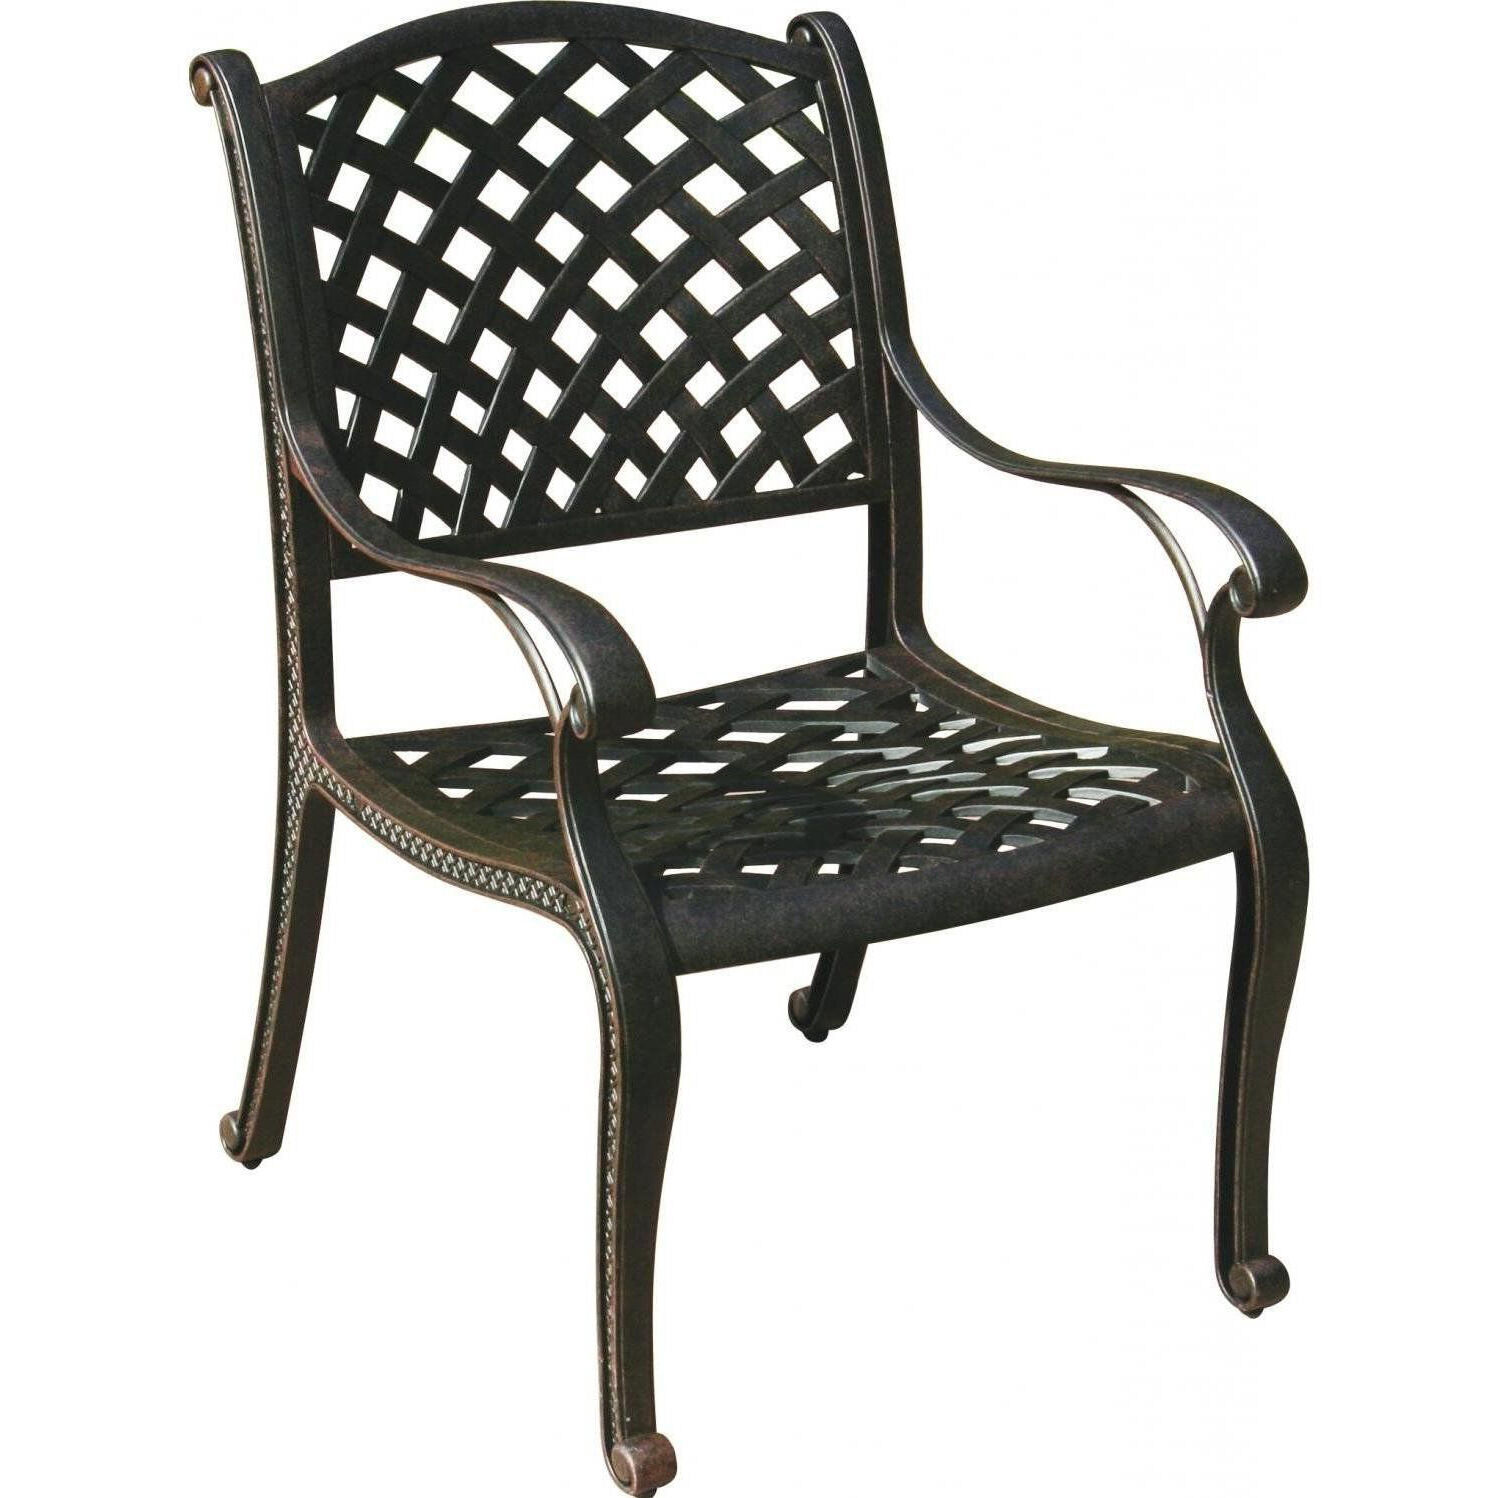 Patio dining chairs set of 6 outdoor cast aluminum furniture Nassau